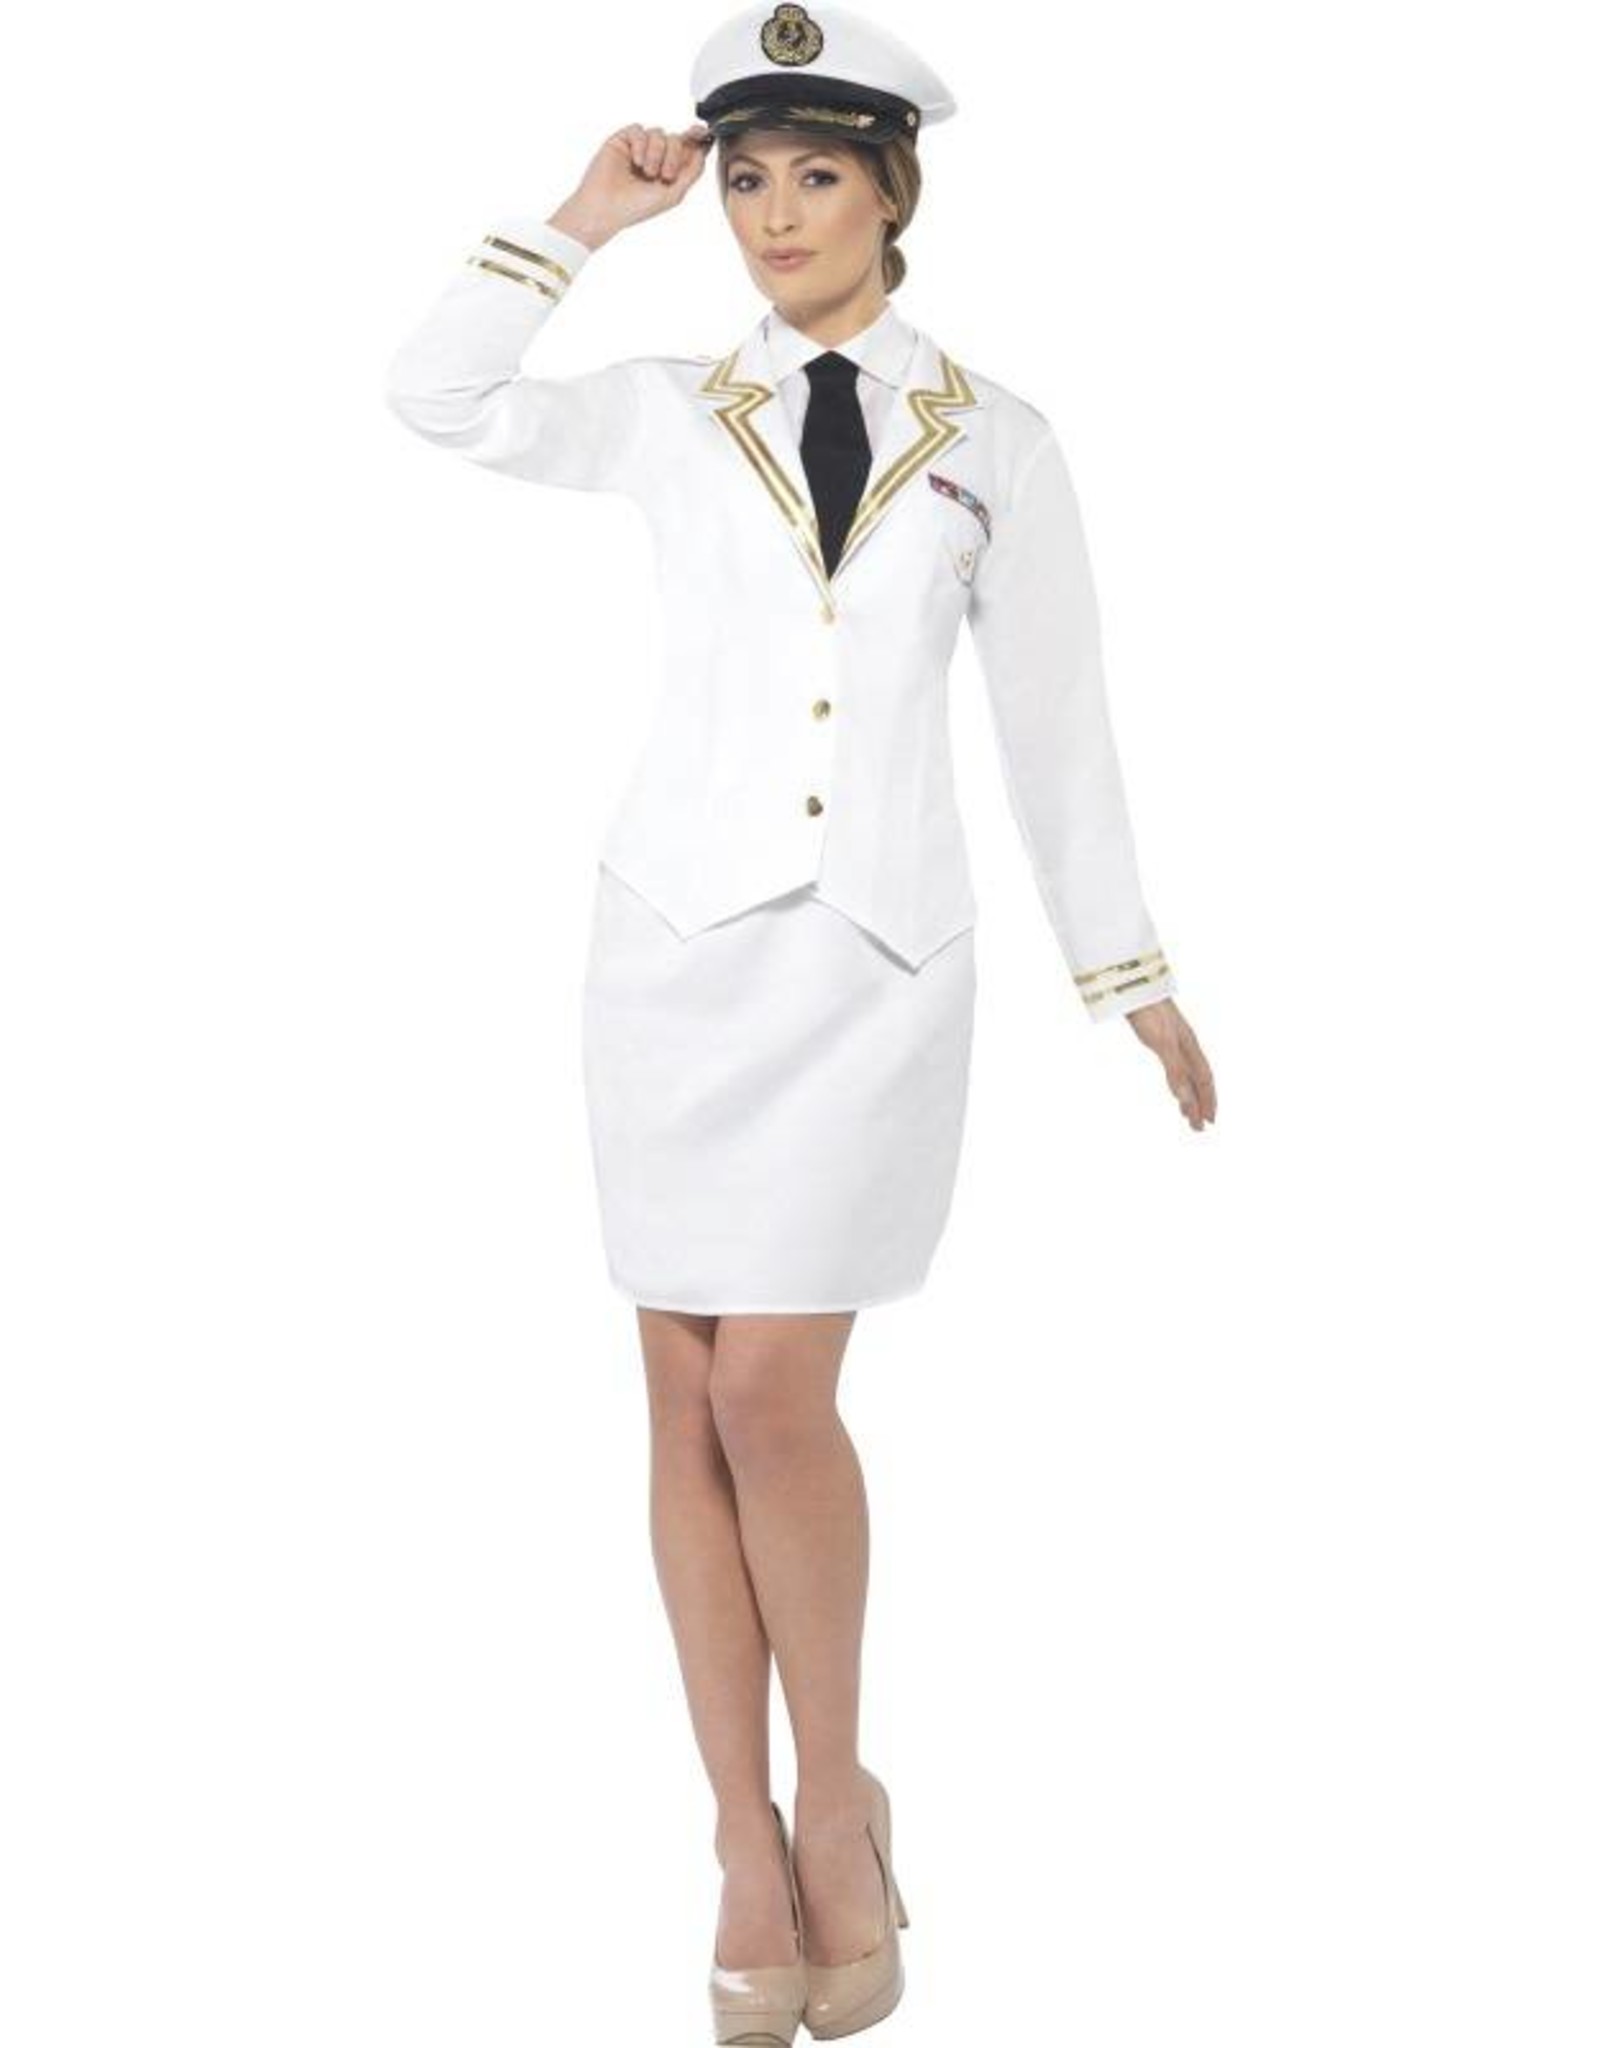 Marine officier kostuum